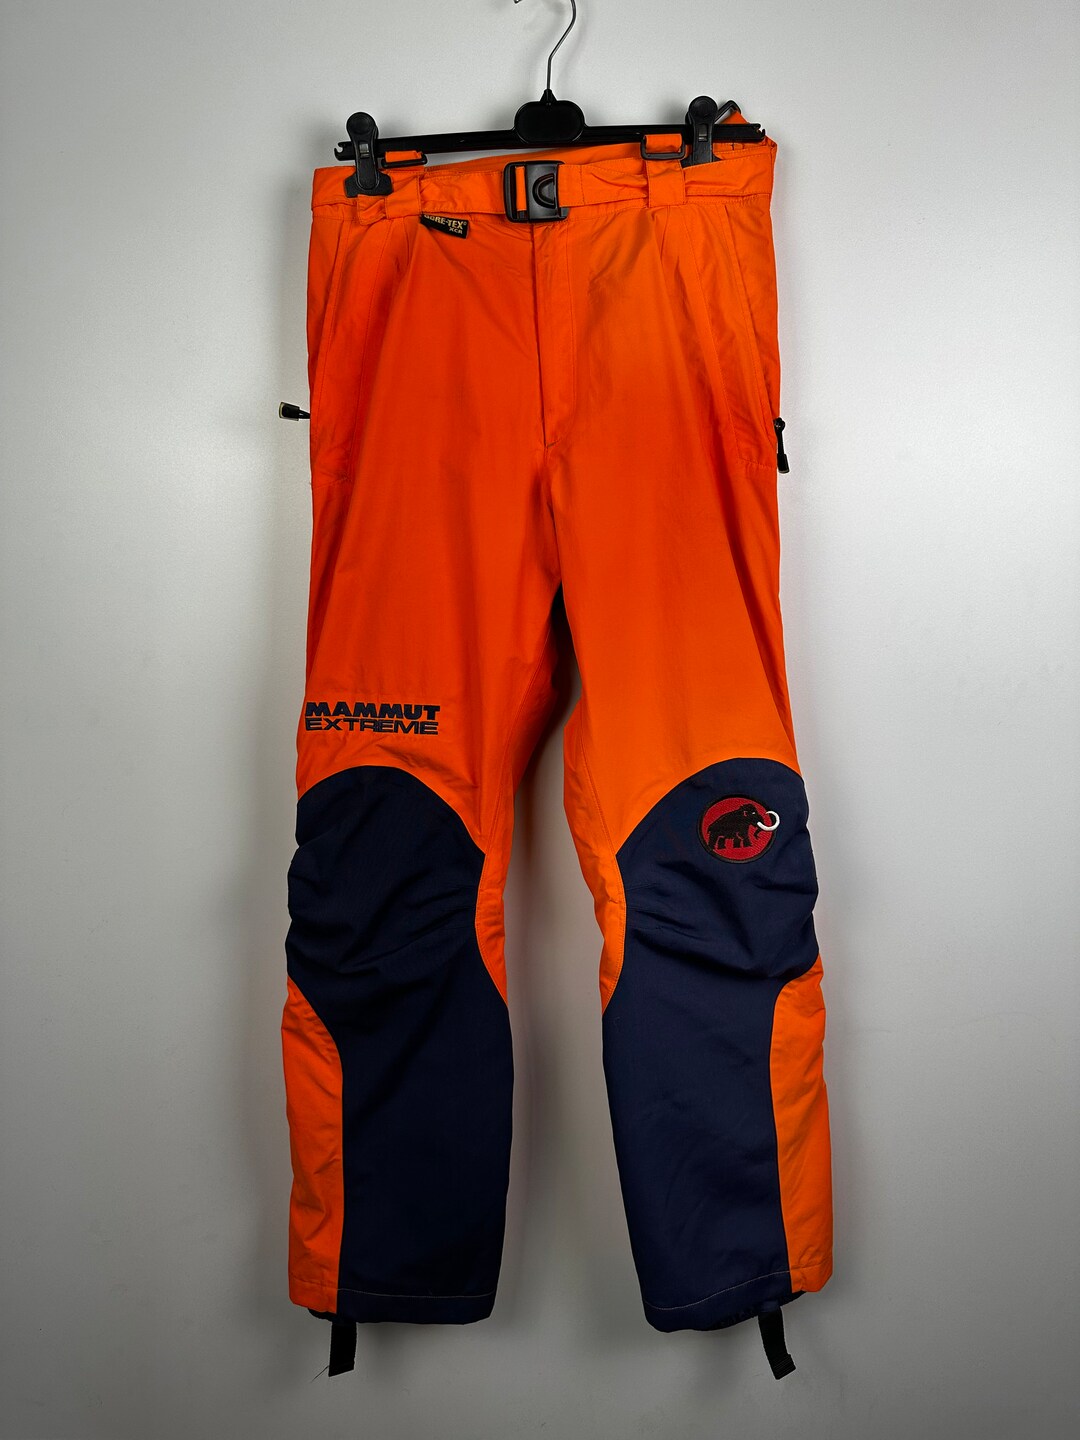 MAMMUT EXTREME Goree-tex Xcr Nuptse Pants Trousers Orange Navy - Etsy